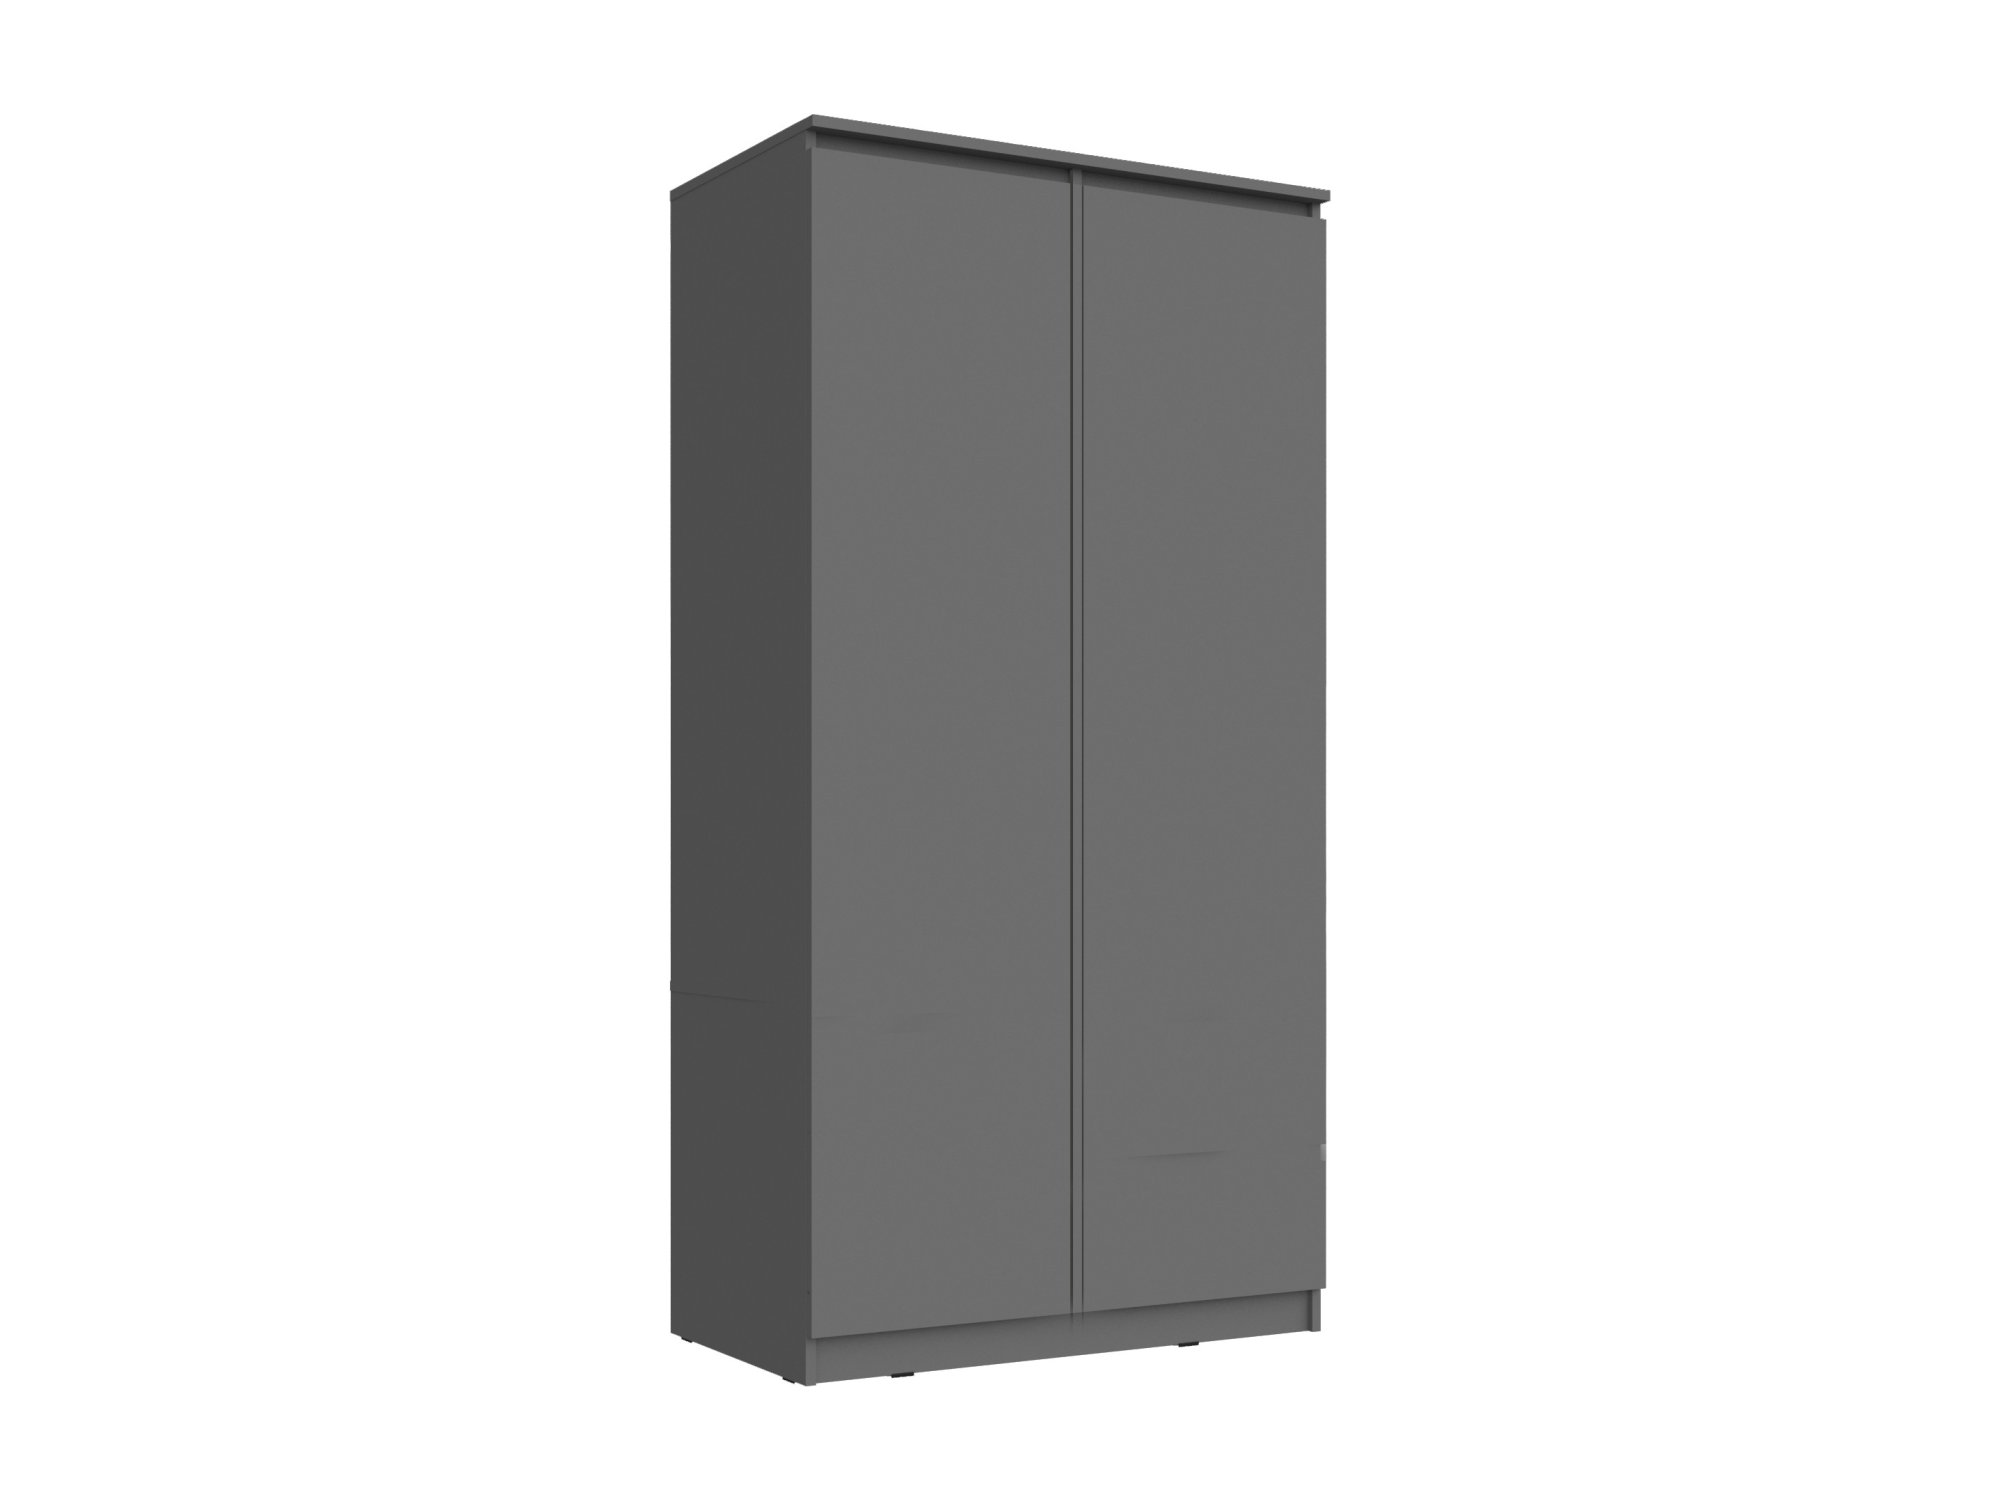 Челси Шкаф 2-х створчатый платяной (Графит, Графит) Графит, Черный, ЛДСП челси шкаф 2 х створчатый комбинированный графит графит черный лдсп